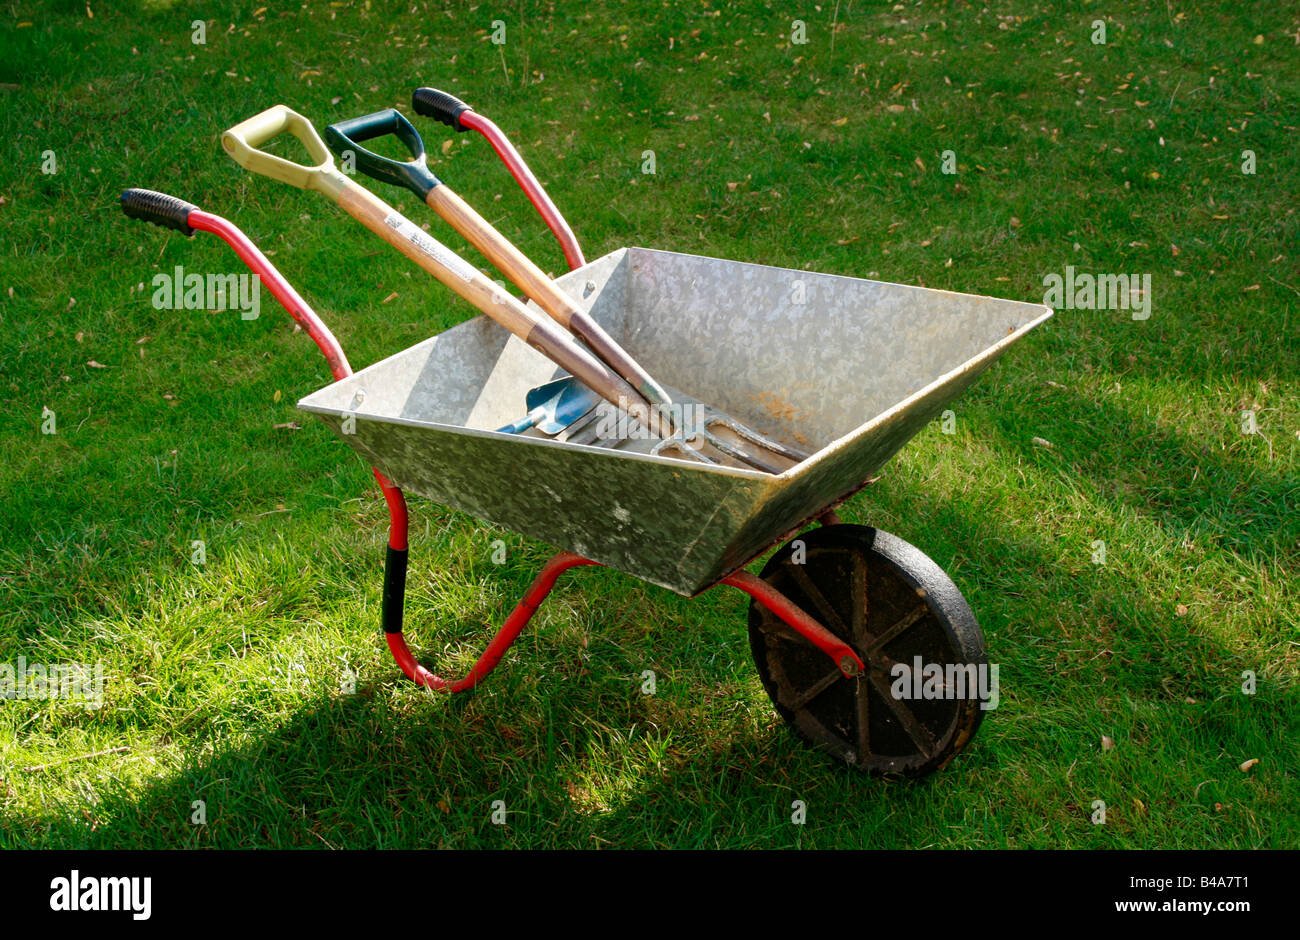 Garden wheelbarrow with tools. Stock Photo